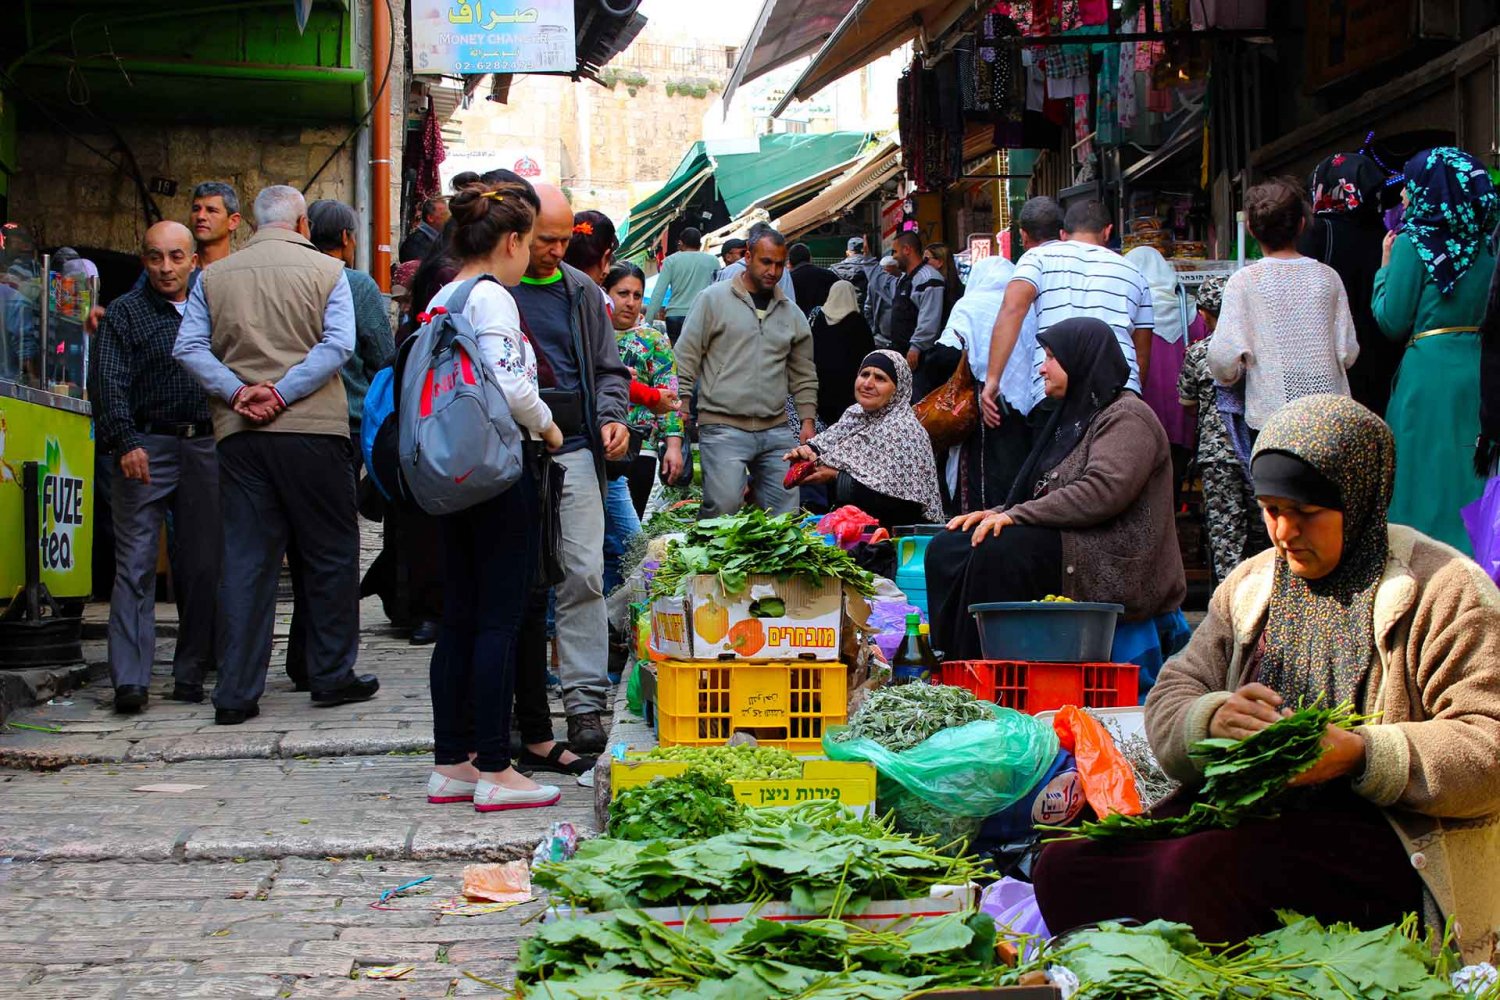 Palestinian villagers sell spring produce near Damascus Gate in Jerusalem’s Old City